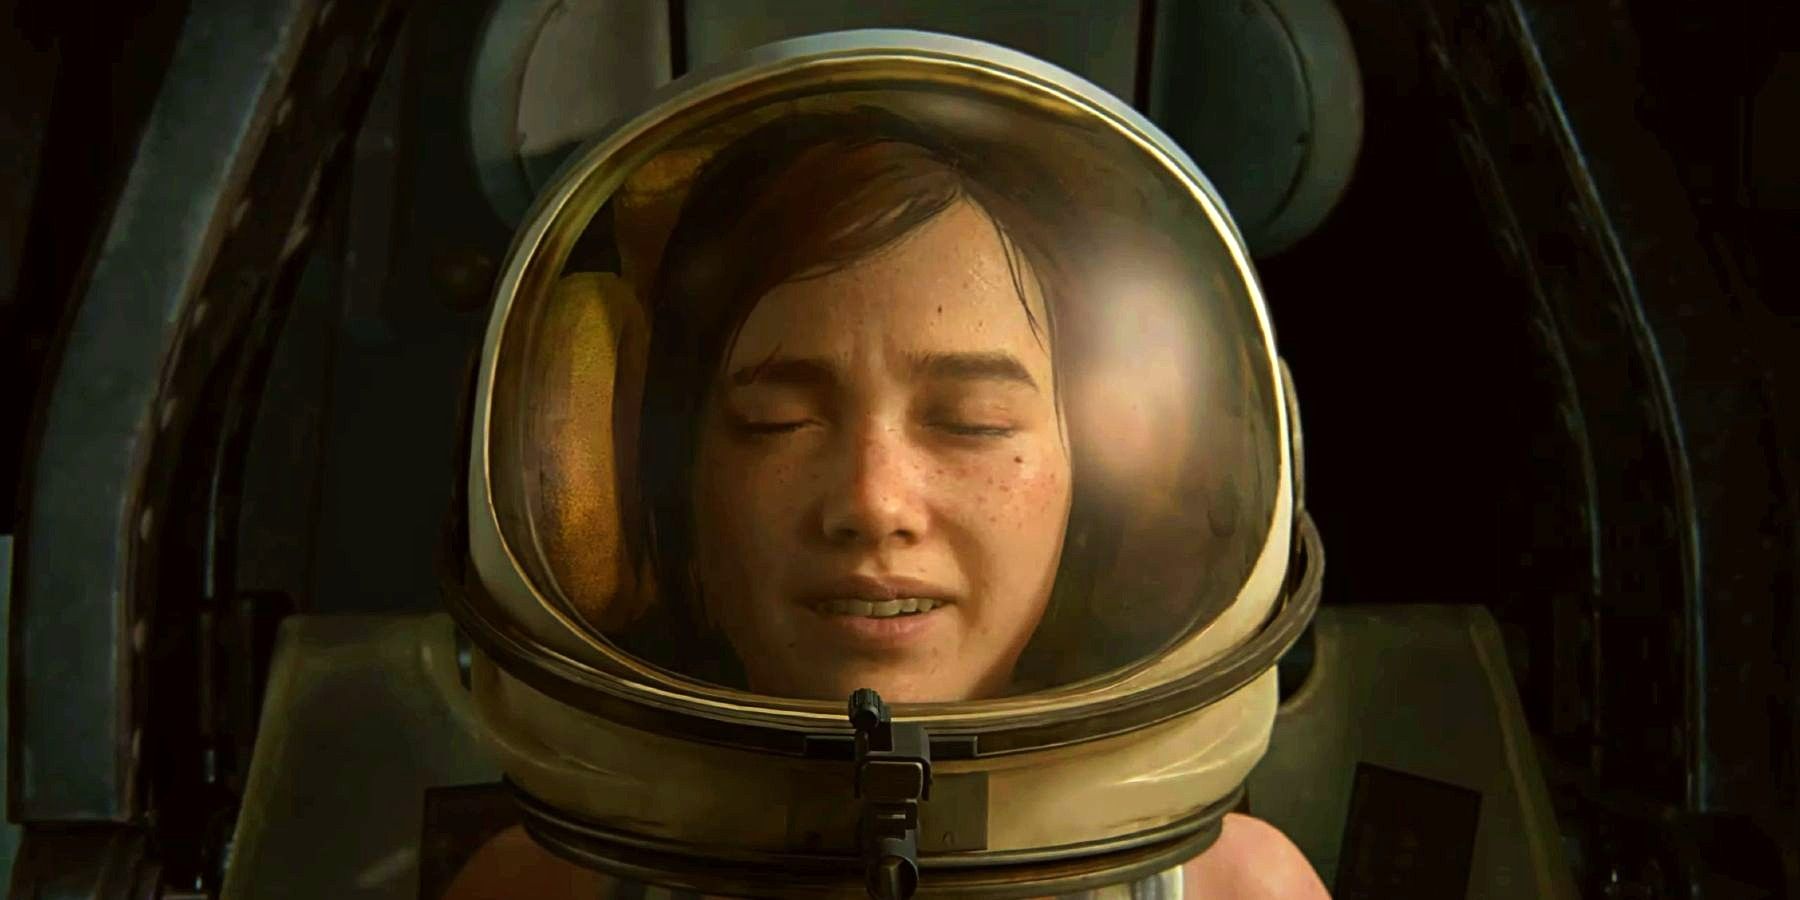 Ellie wearing the astronaut helmet in The Last of Us Part II